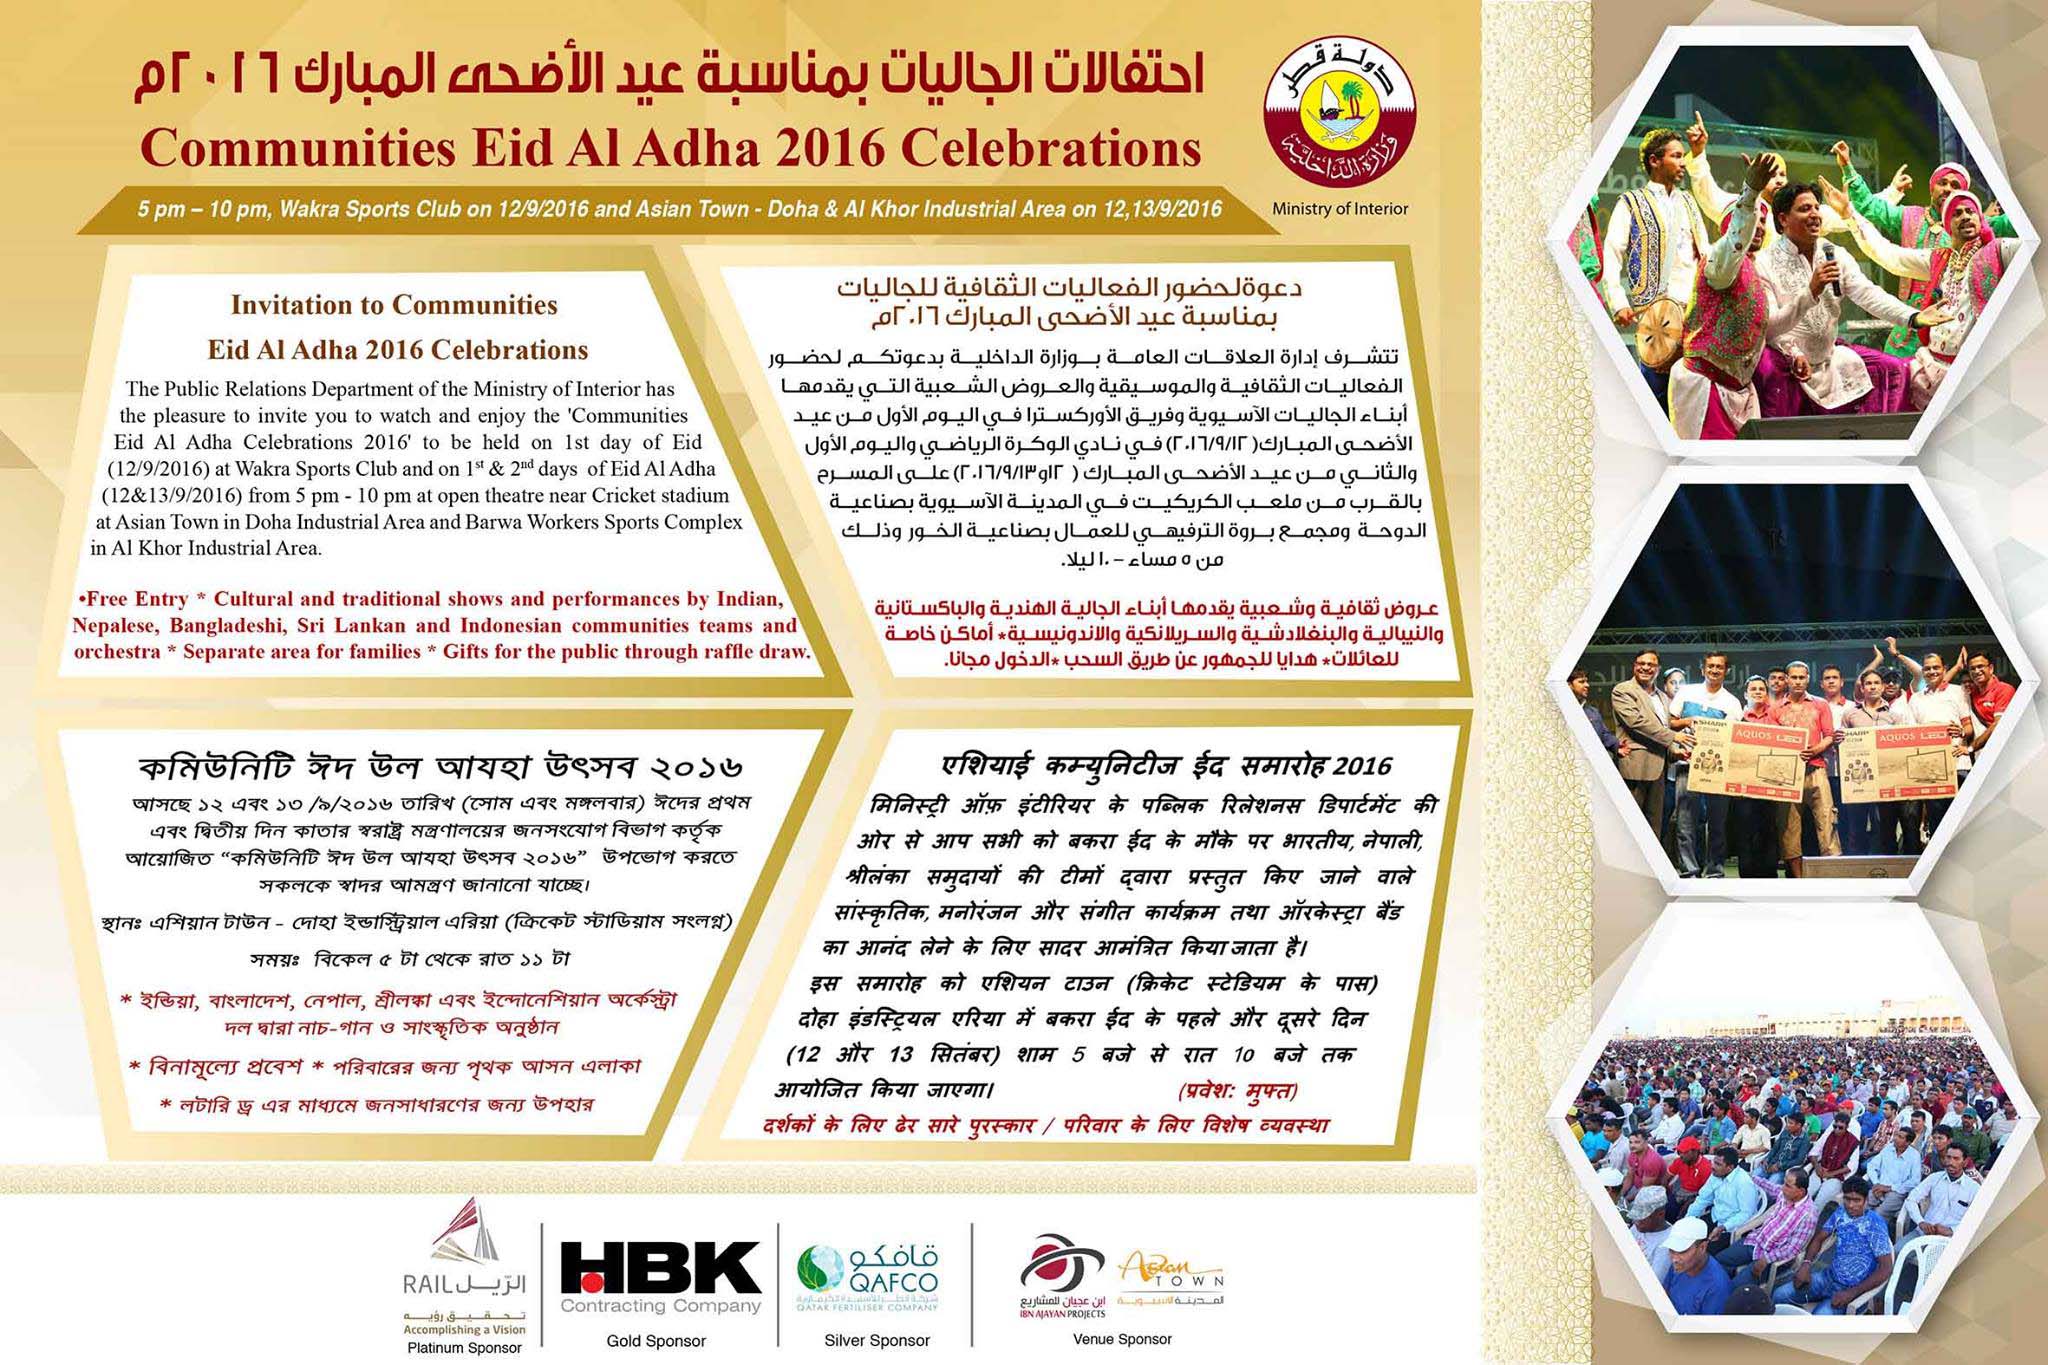 MOI community events for Eid Al Adha